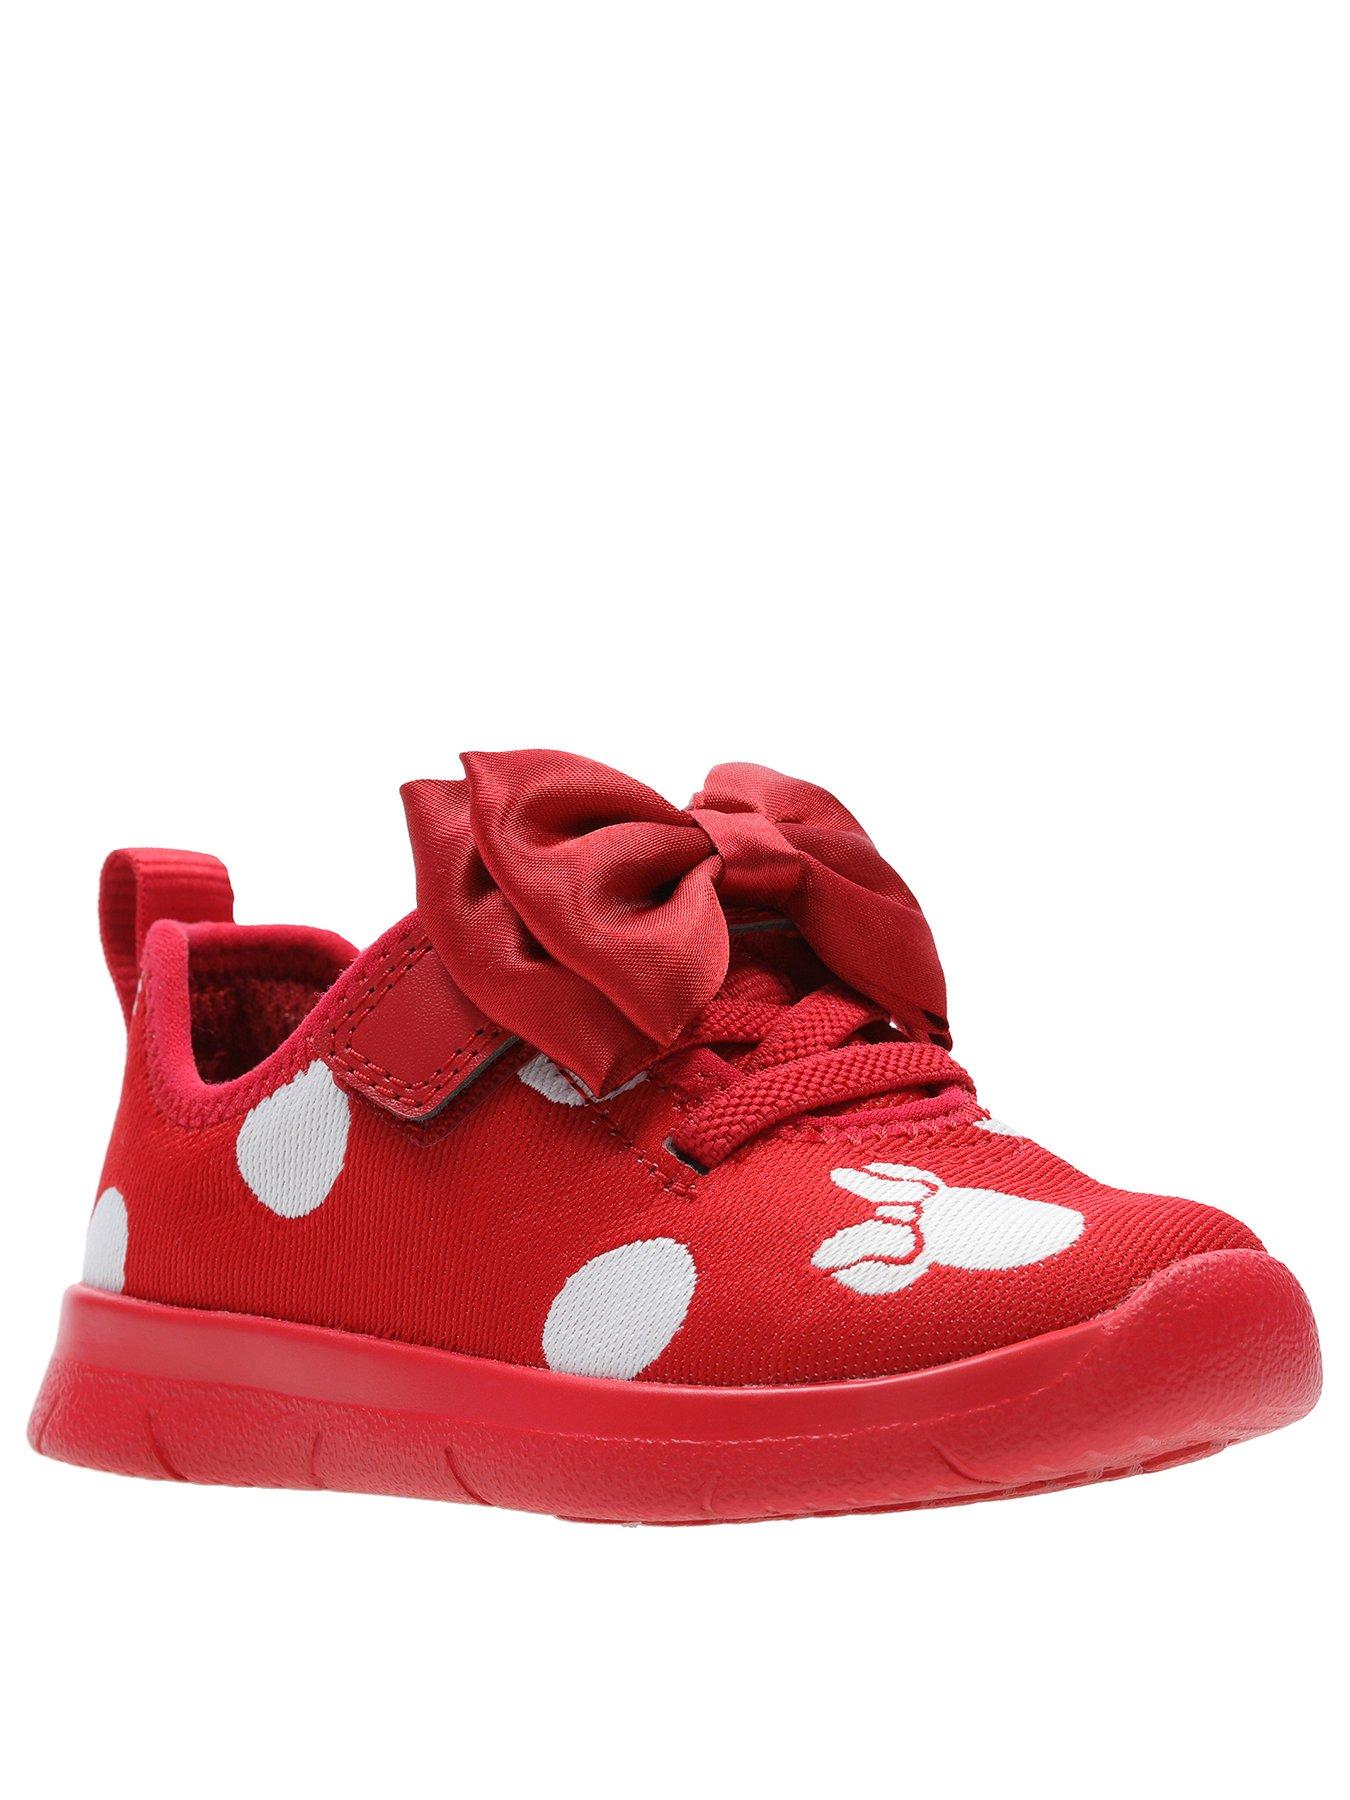 clarks girls toddler shoes